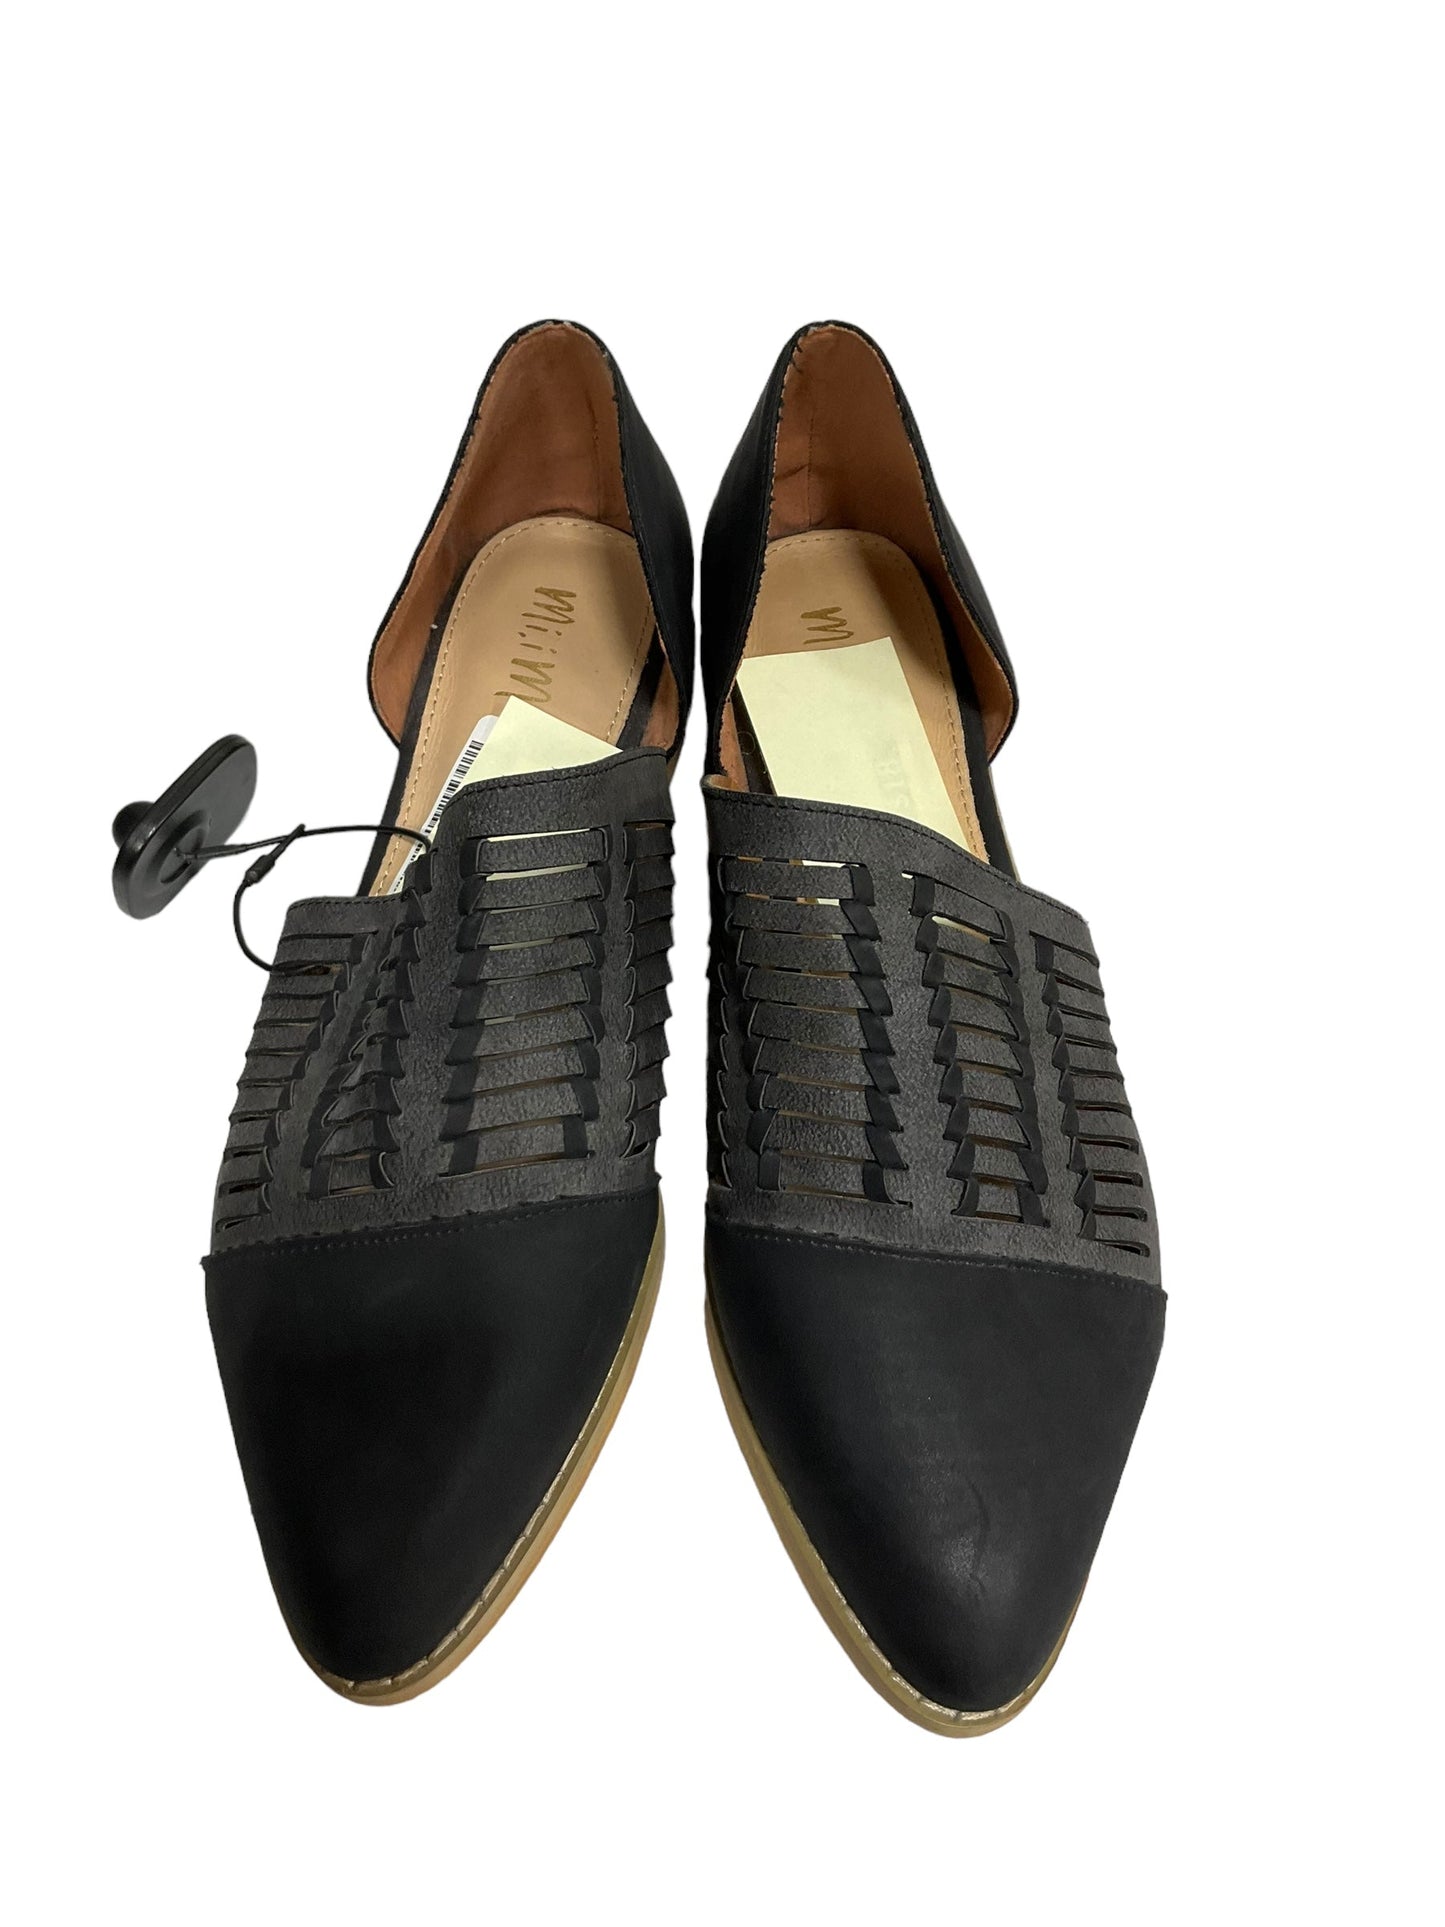 Black & Grey Shoes Flats Clothes Mentor, Size 10